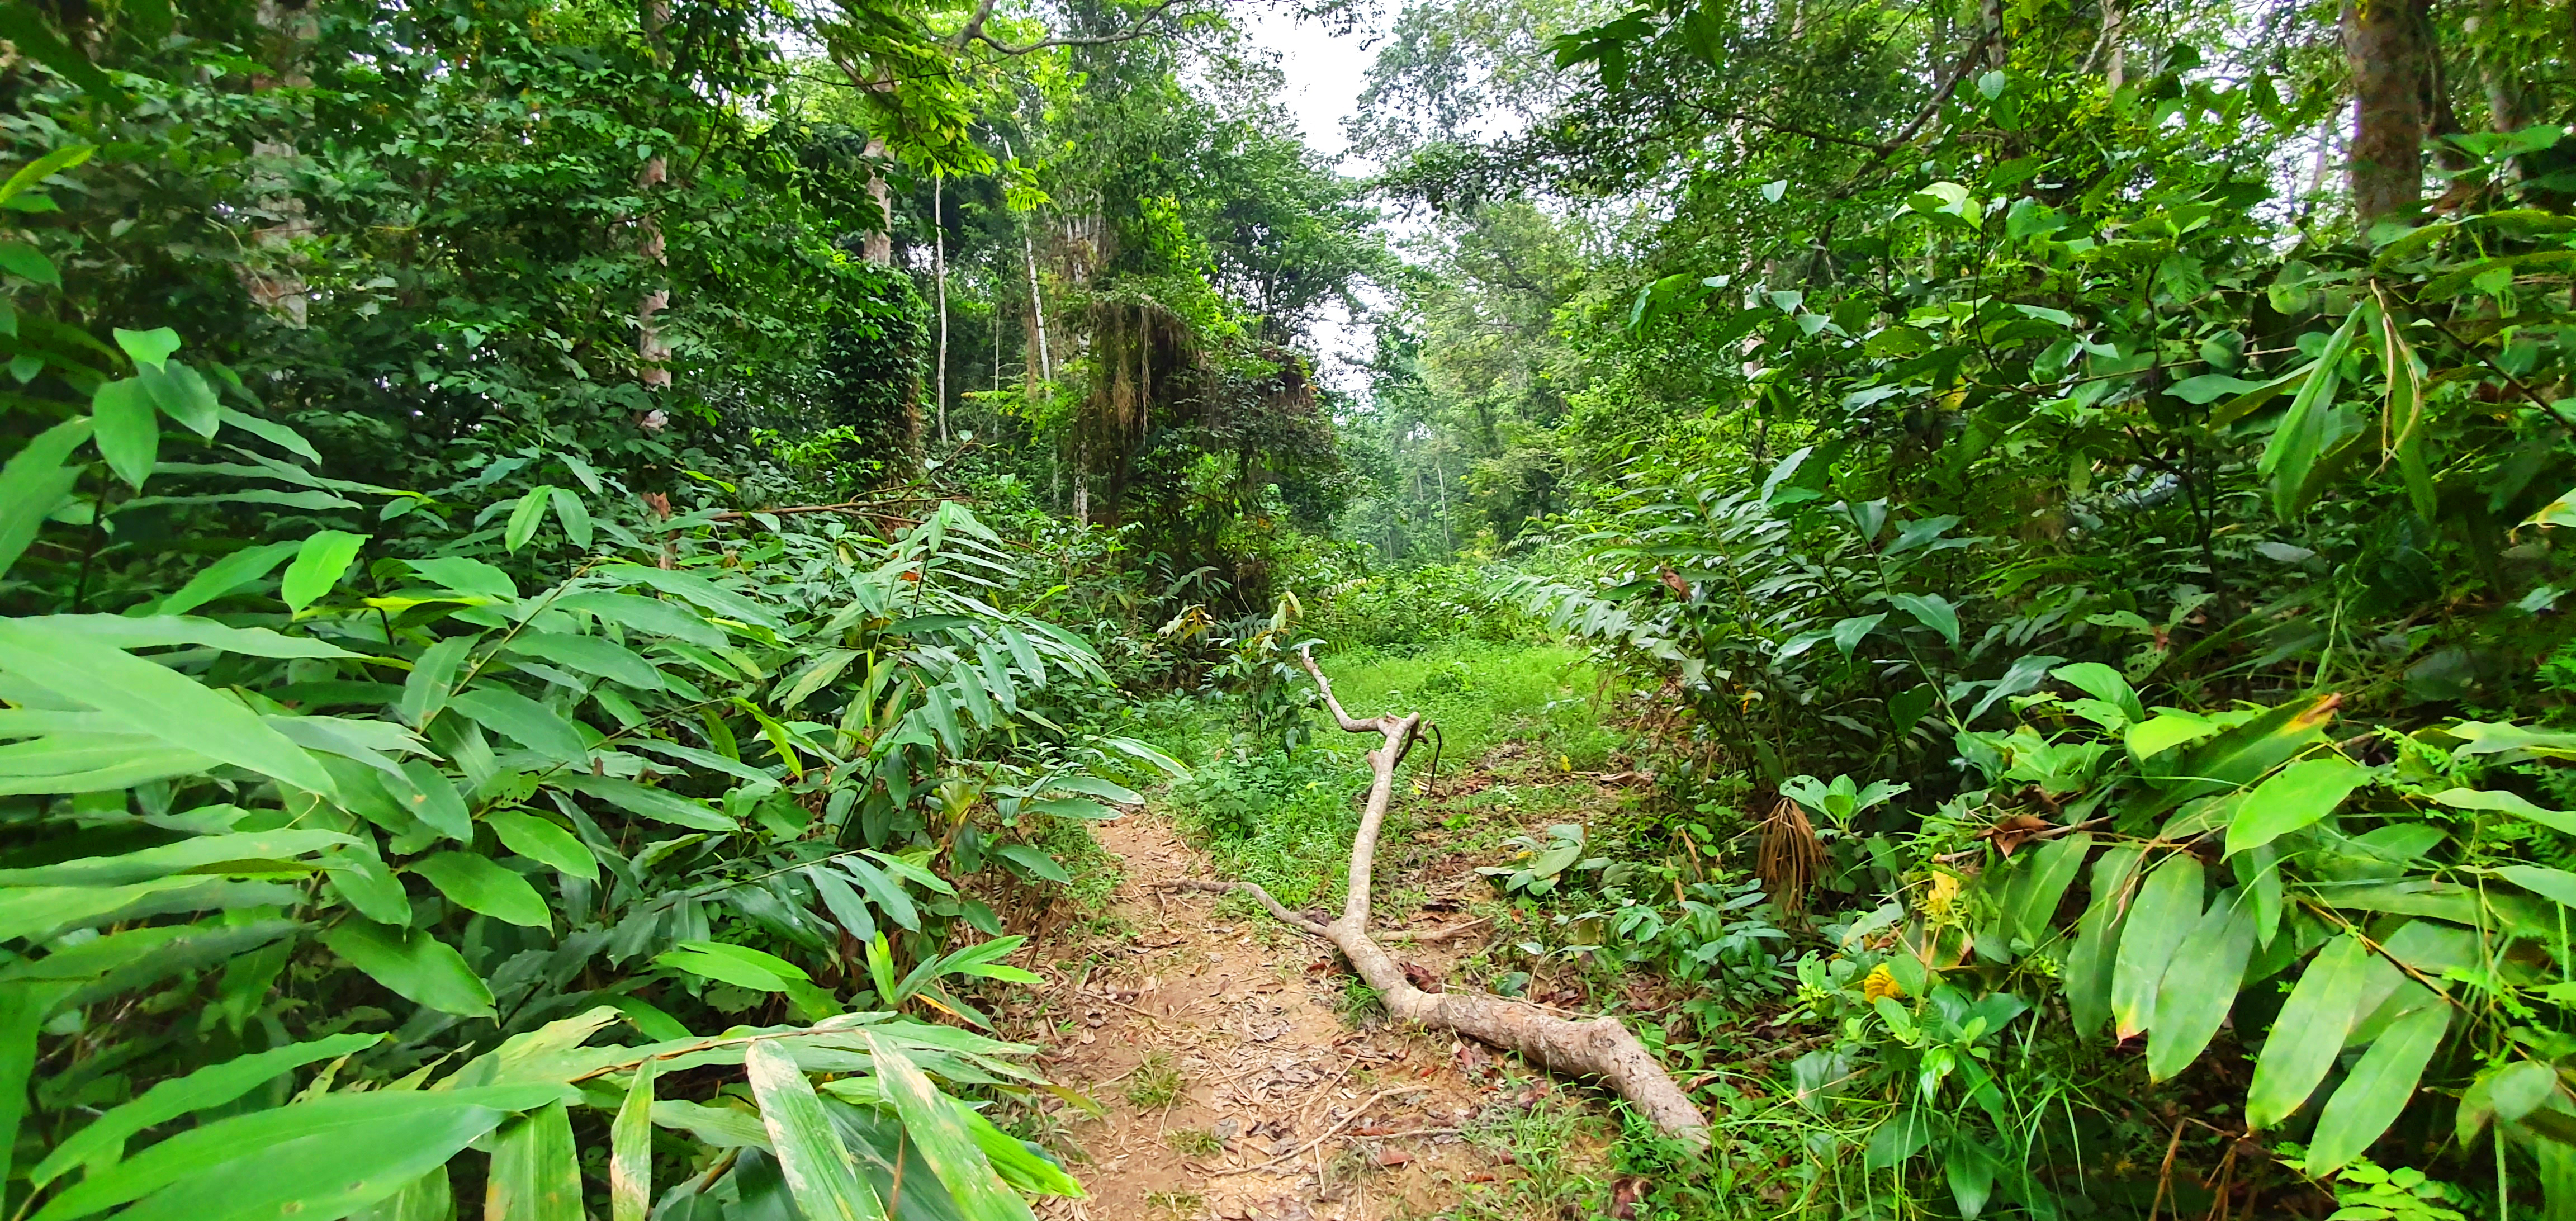 greenery in Gabon rainforest